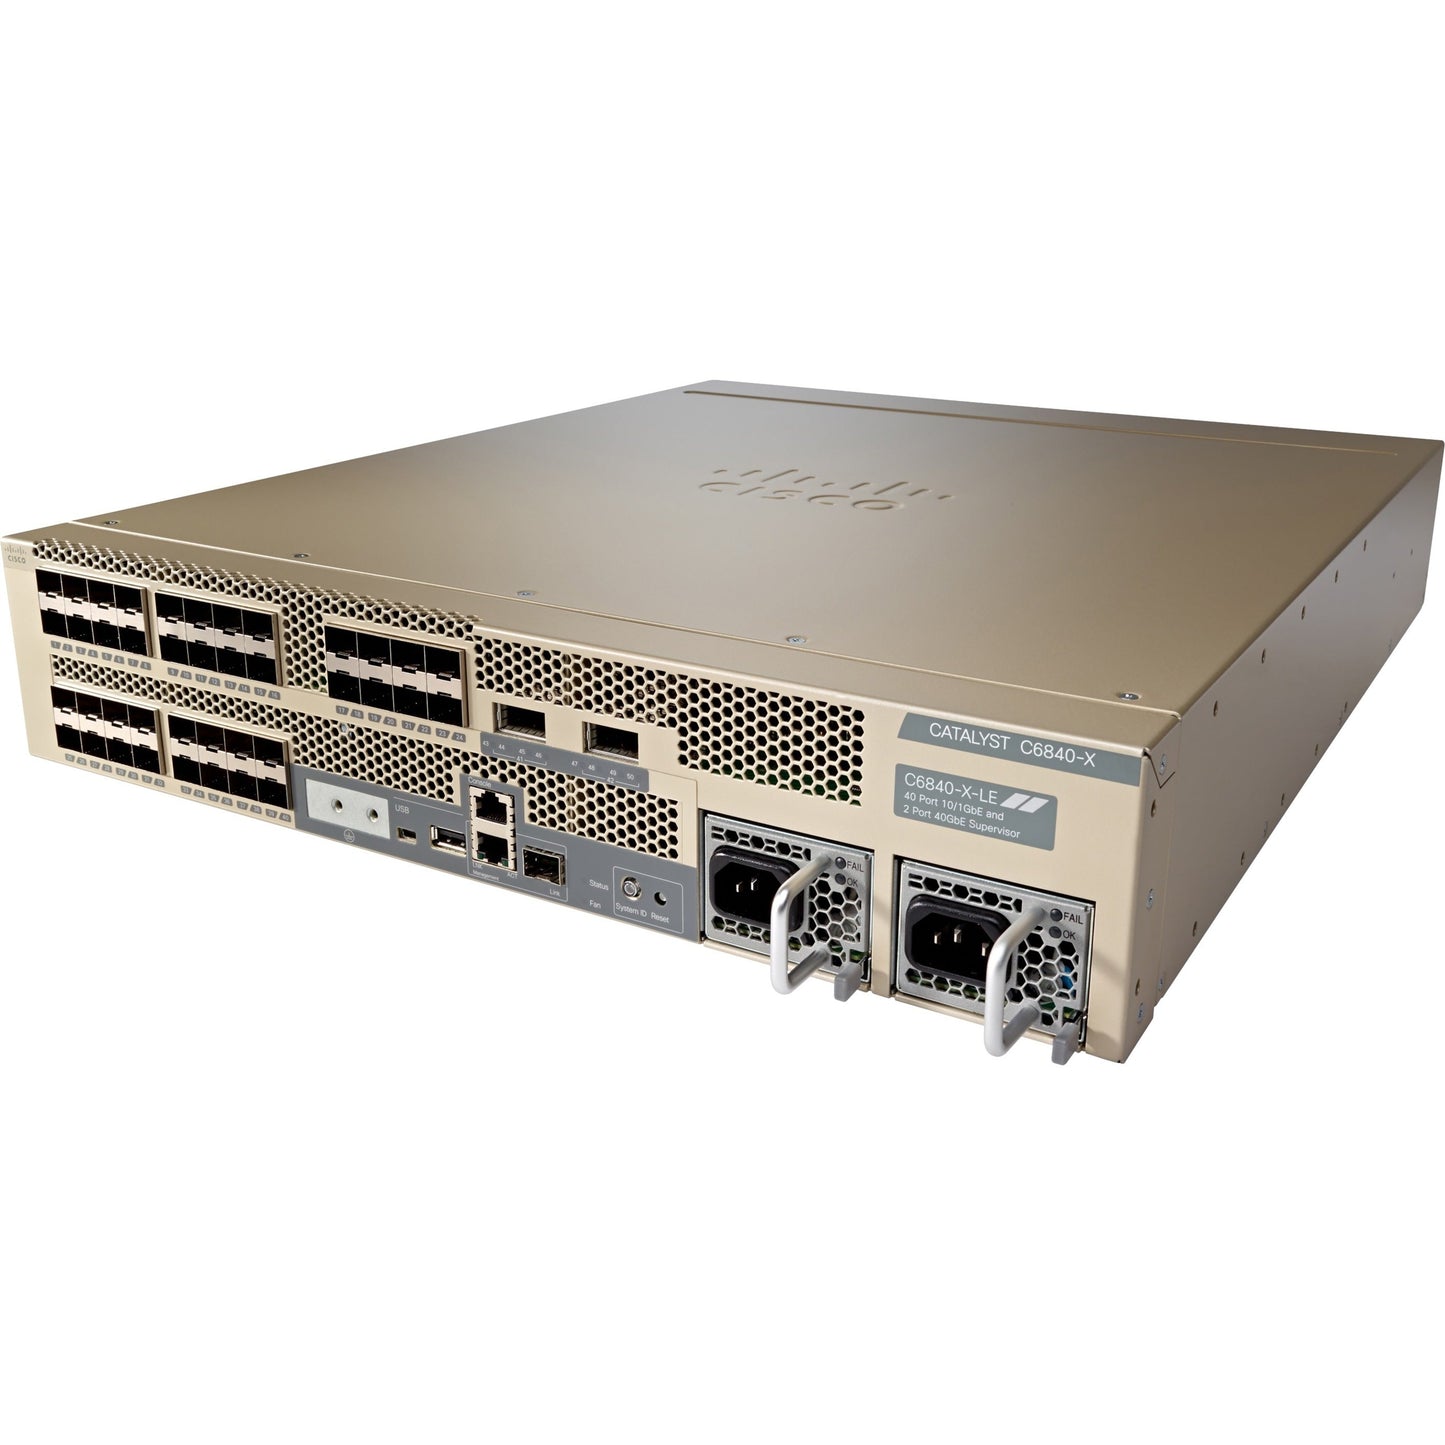 Cisco Catalyst C6840-X-LE-40G Layer 3 Switch